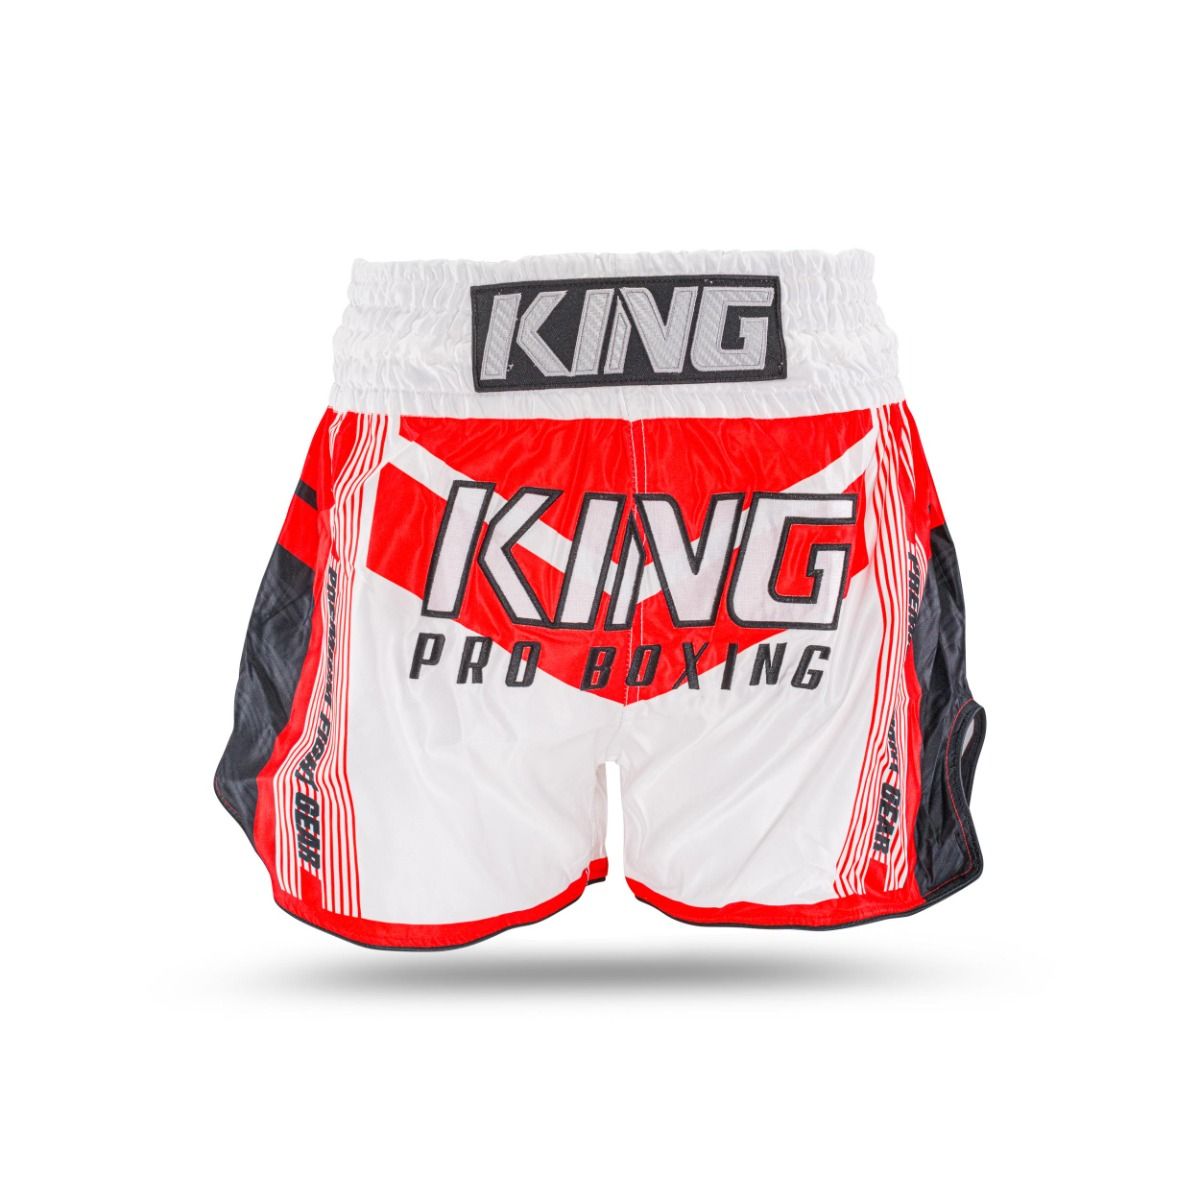 King endurance kick boksbroek wit rood - Booster Fight Store